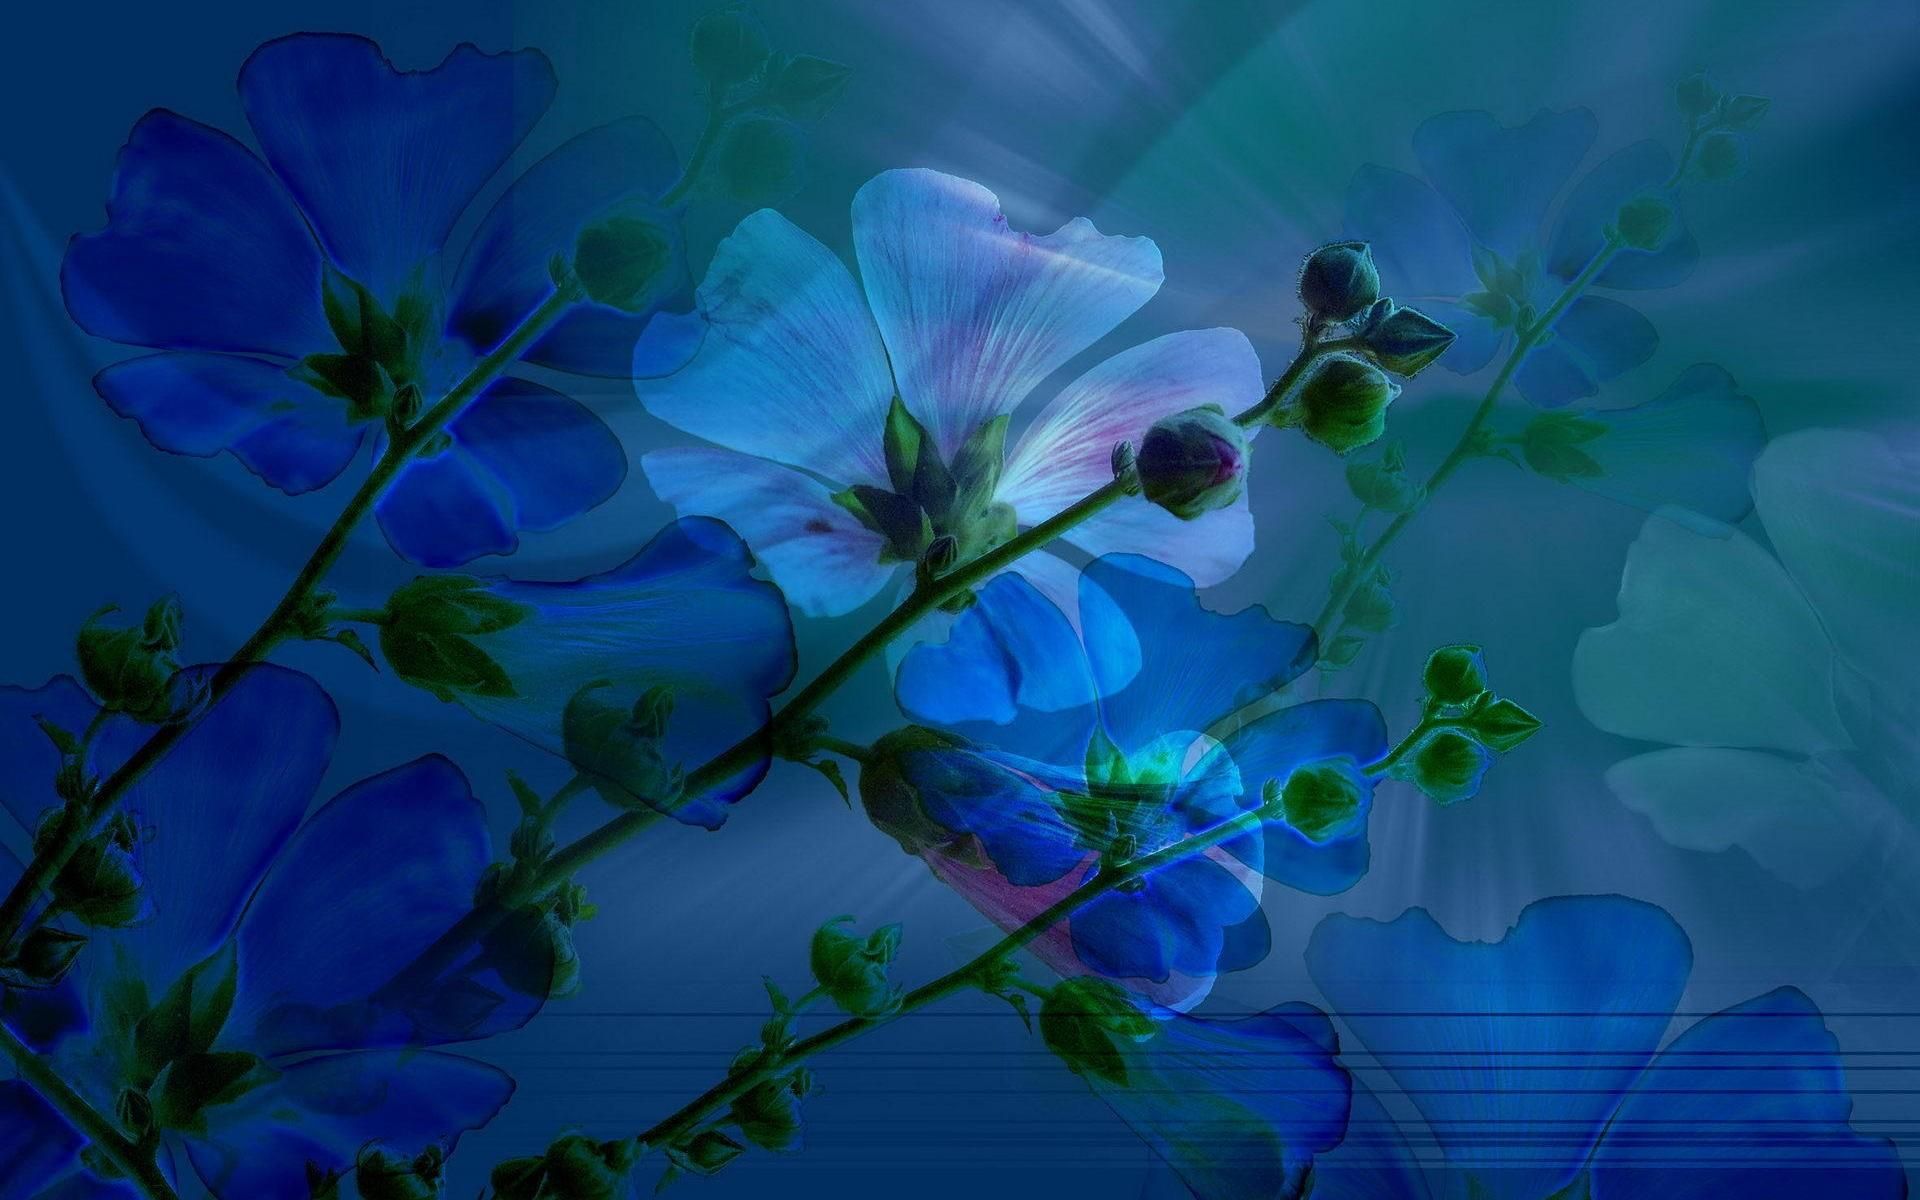 Blue Spring